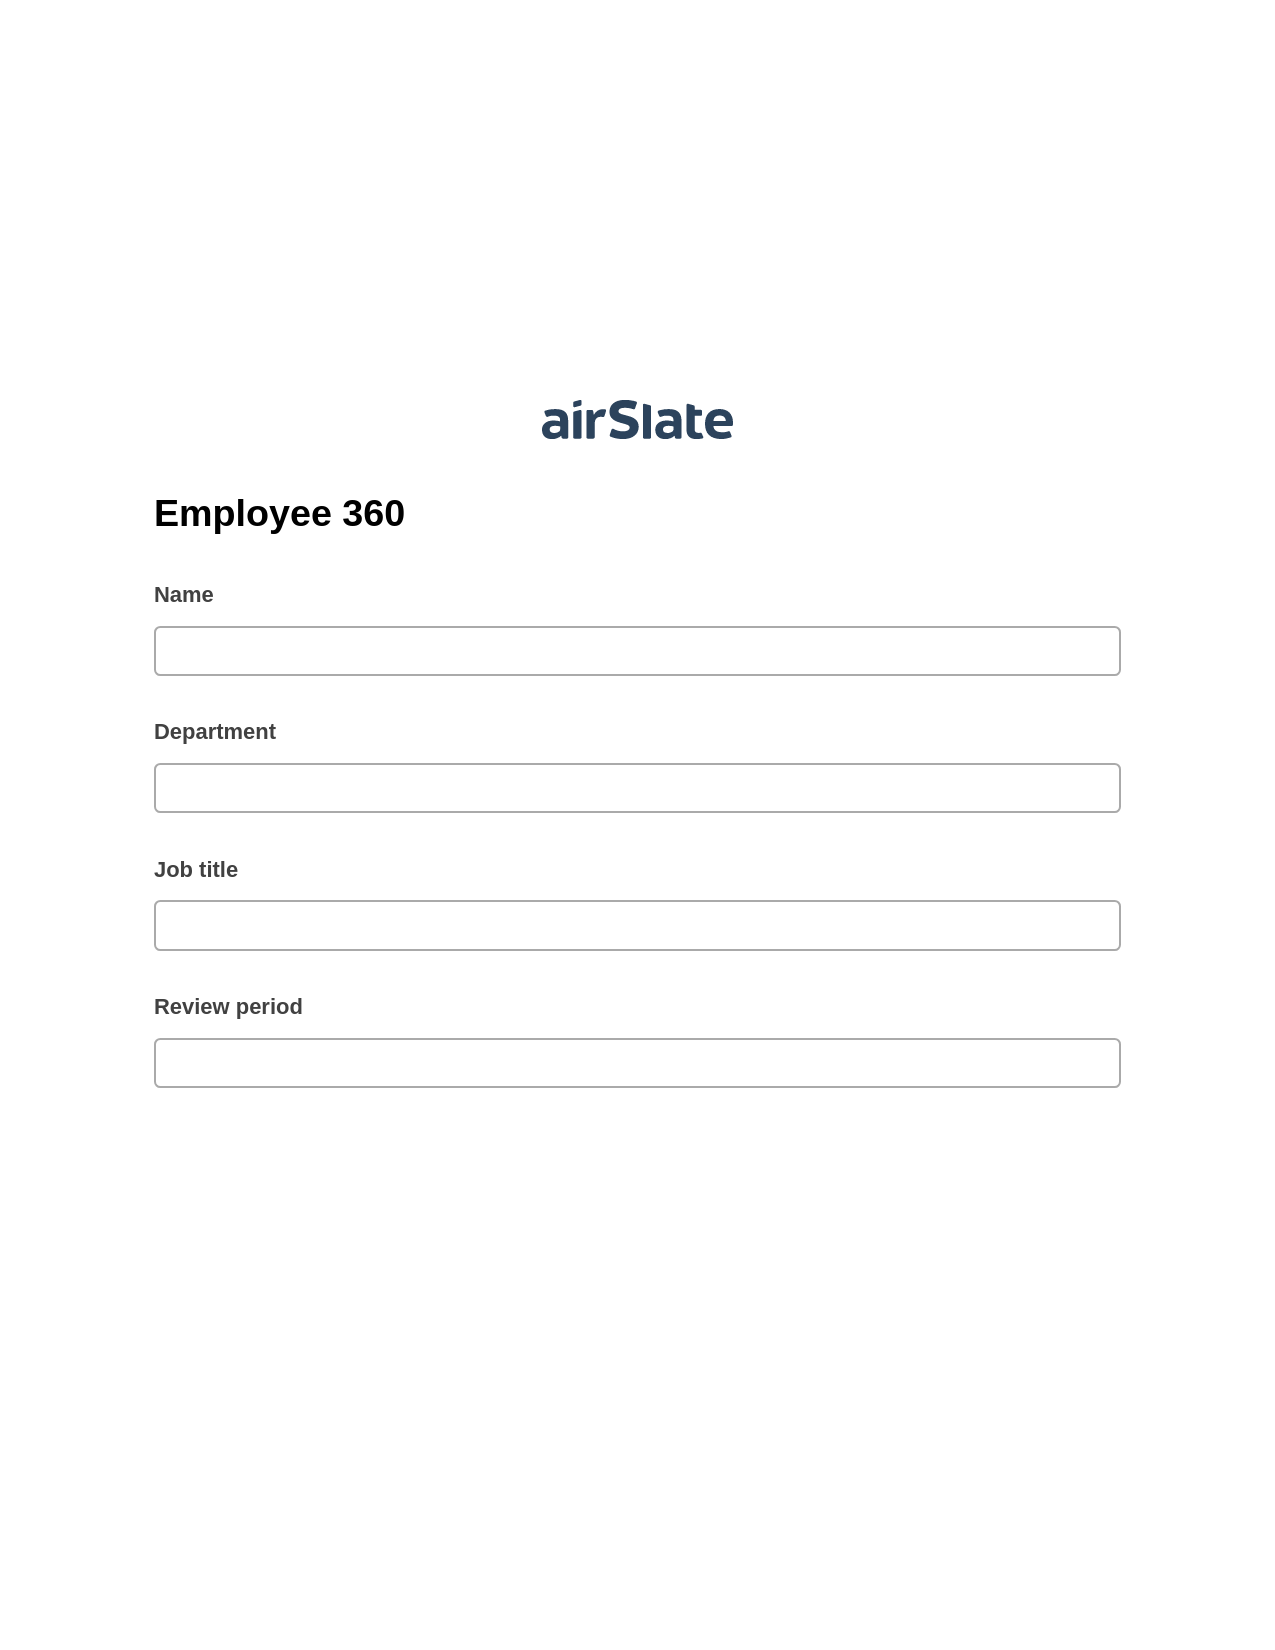 Employee 360 Pre-fill from Excel Spreadsheet Bot, Google Calendar Bot, Webhook Postfinish Bot